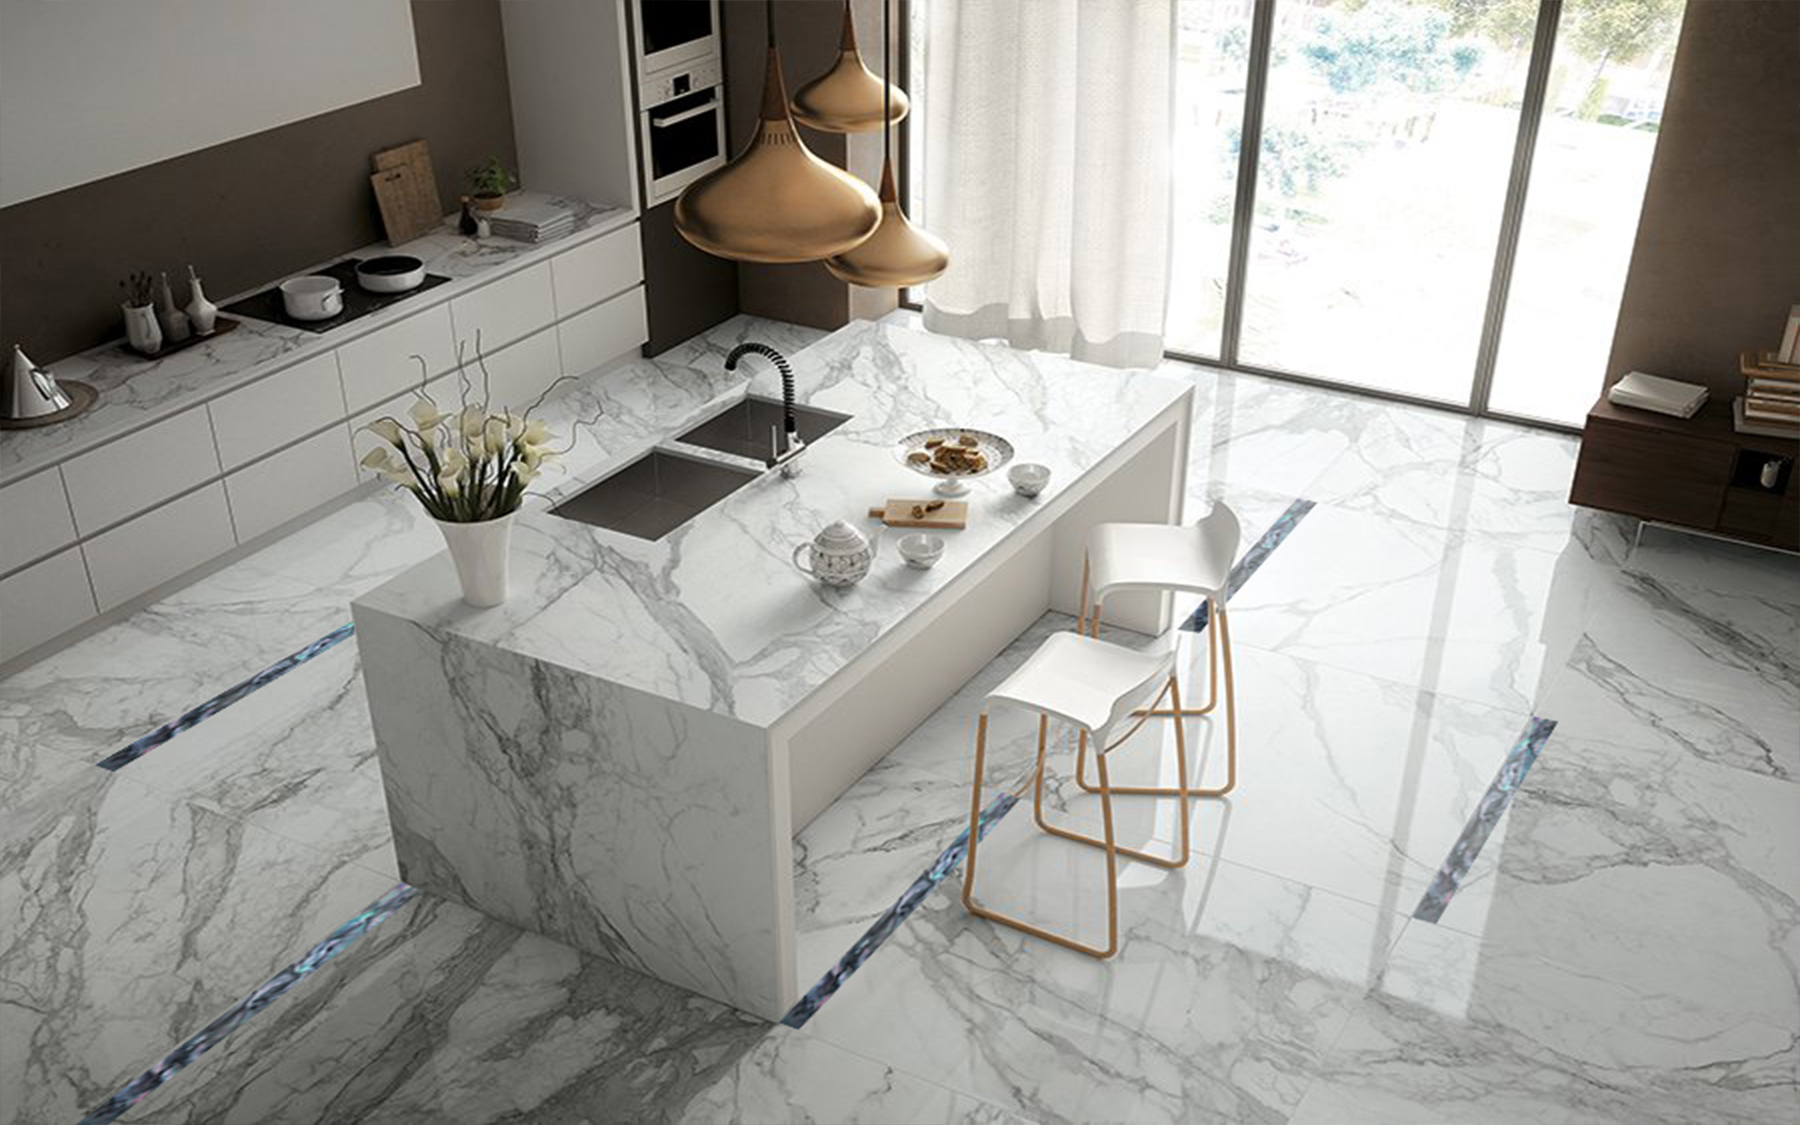 Interior-luxury-italian-tiles-decor-carbon-fiber-mother-of-pearl-leaflat-FBINNOTECH-Piastrelle-in-fibra-carbonio-madreperla-decorazione-interni-Кар-6.jpg